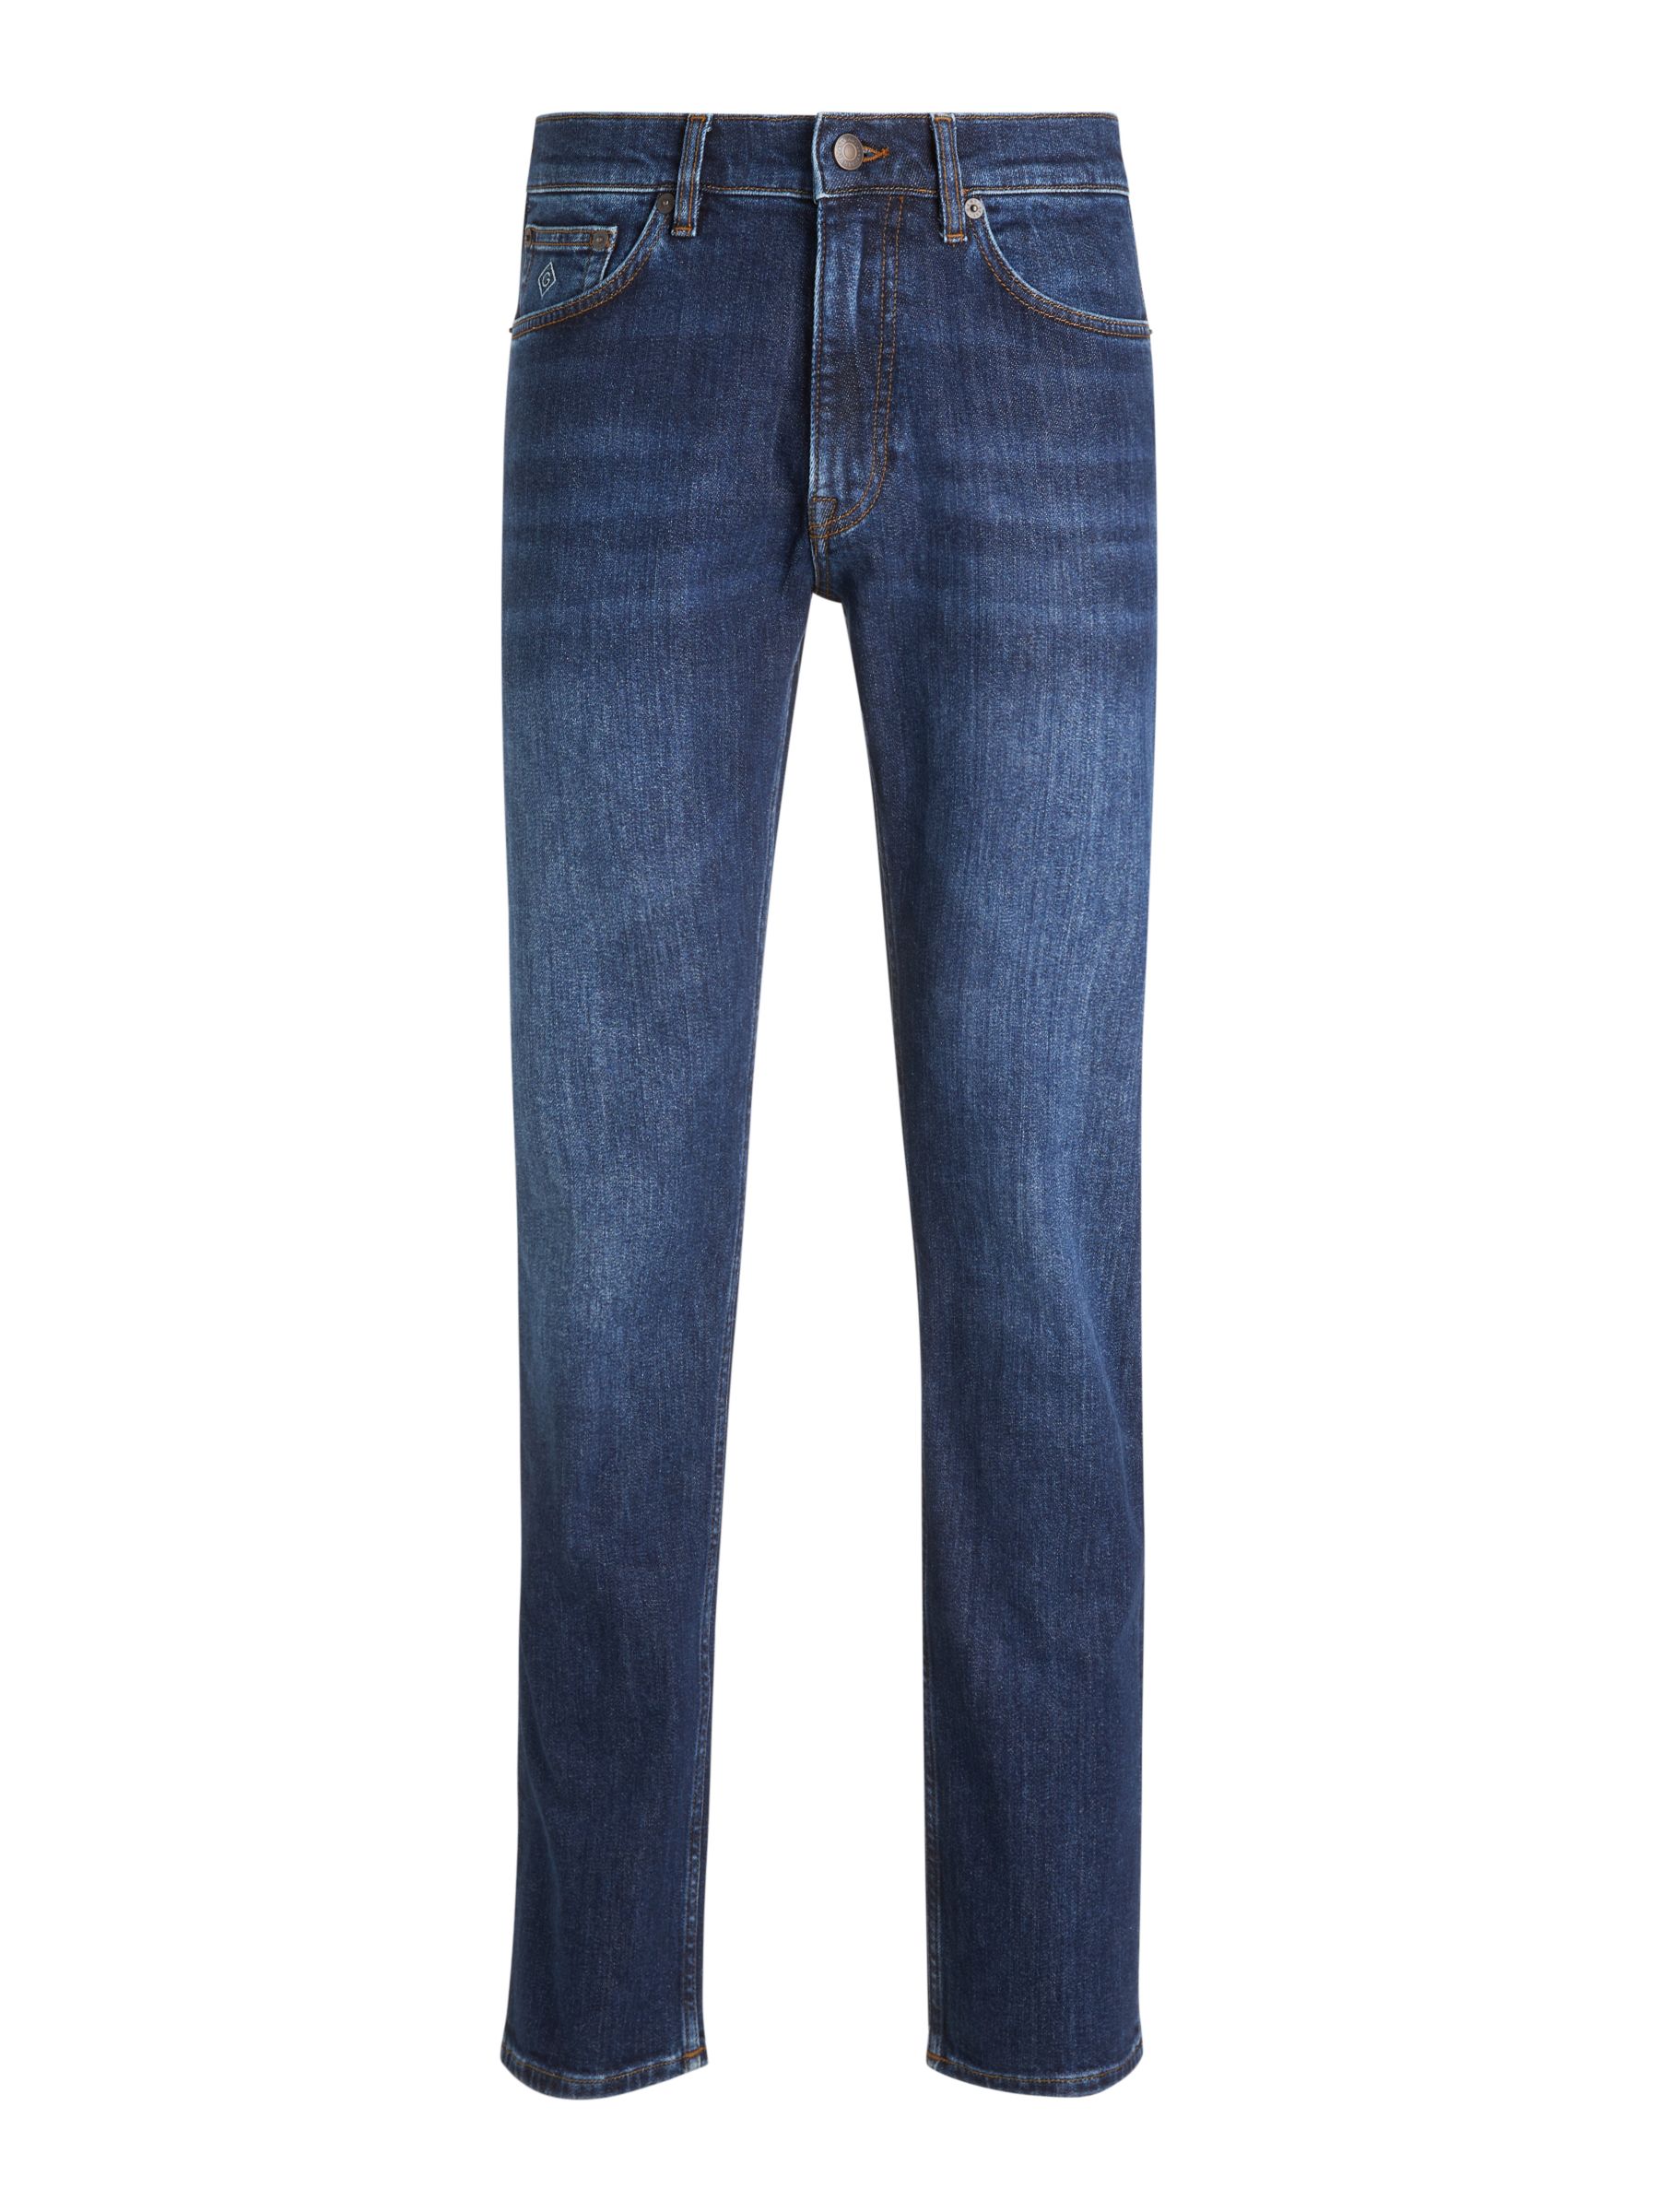 GANT Regular Straight Jeans, Dark Blue Rinse at John Lewis & Partners